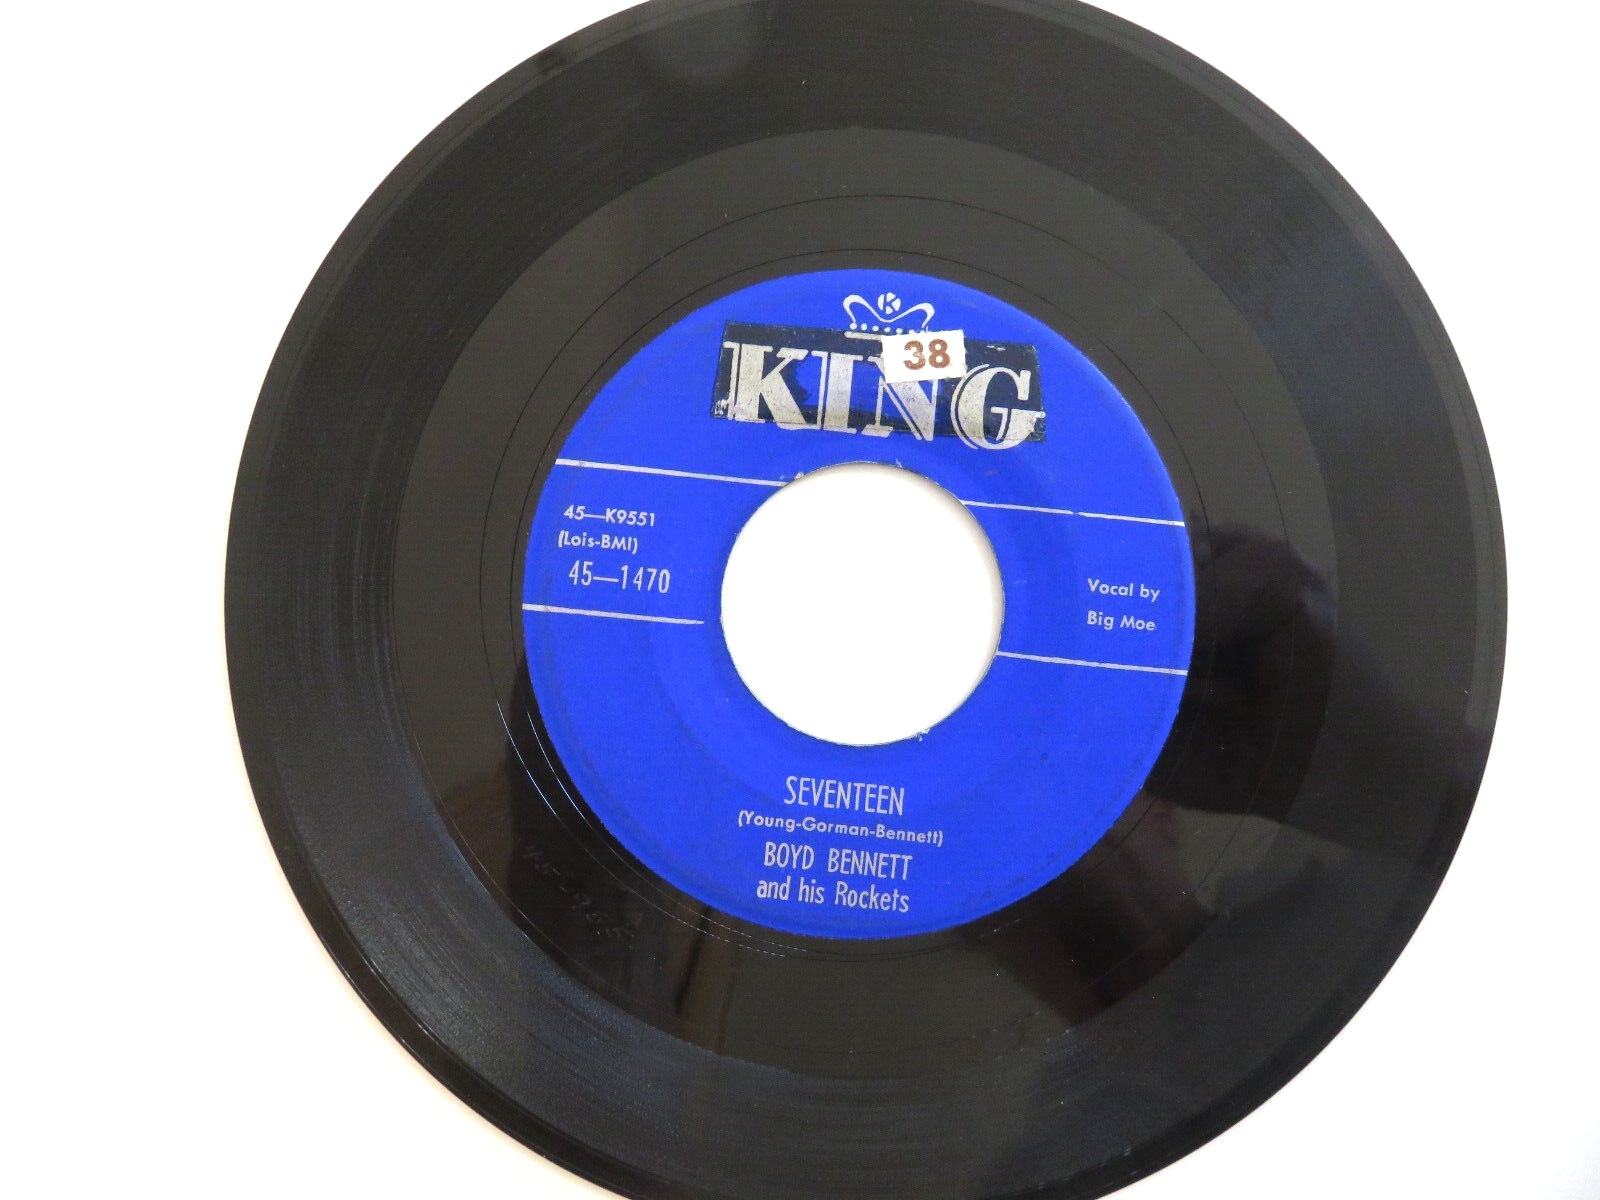 Boyd Bennett & His Rockets - Little ole you all/Seventeen 45 RPM on KING VG-